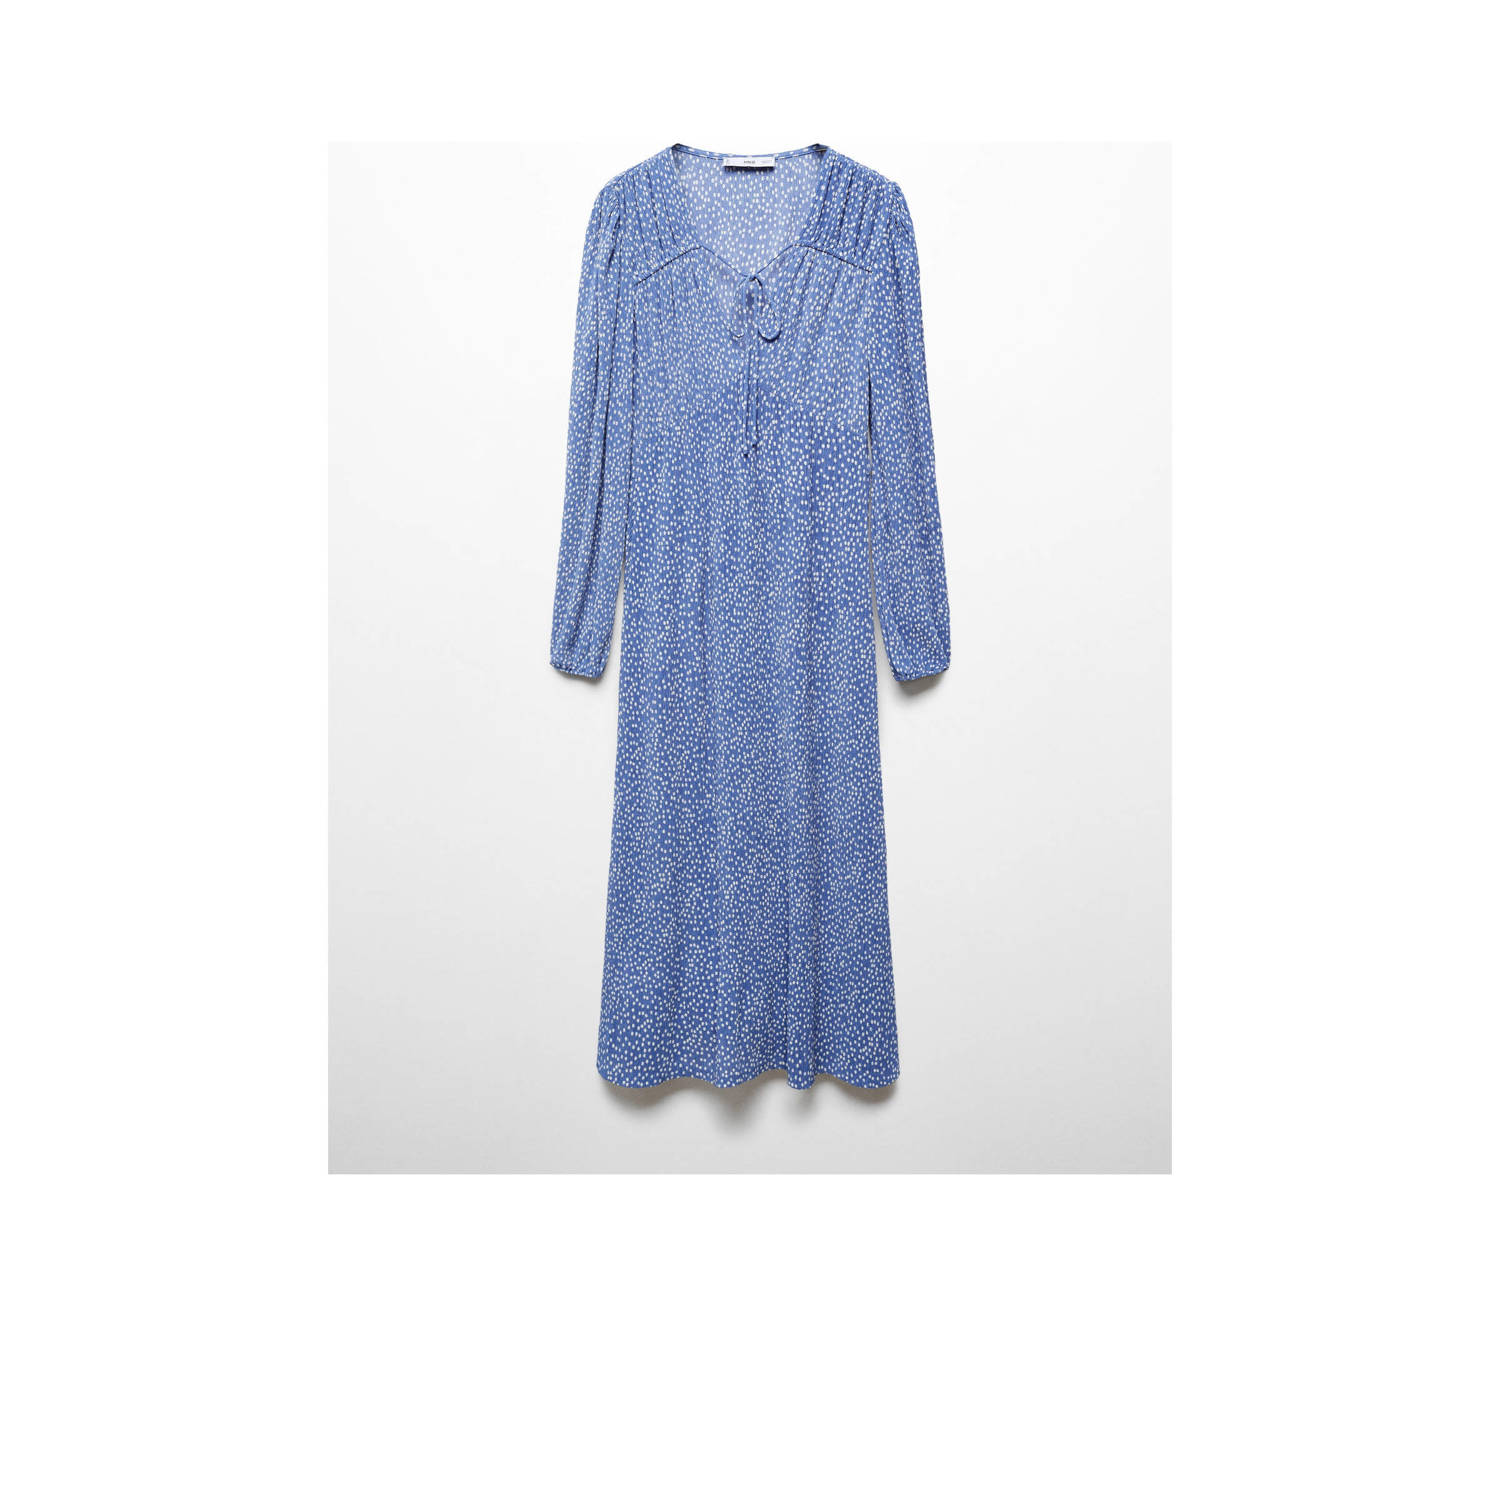 Mango A-lijn jurk met stippen blauw wit